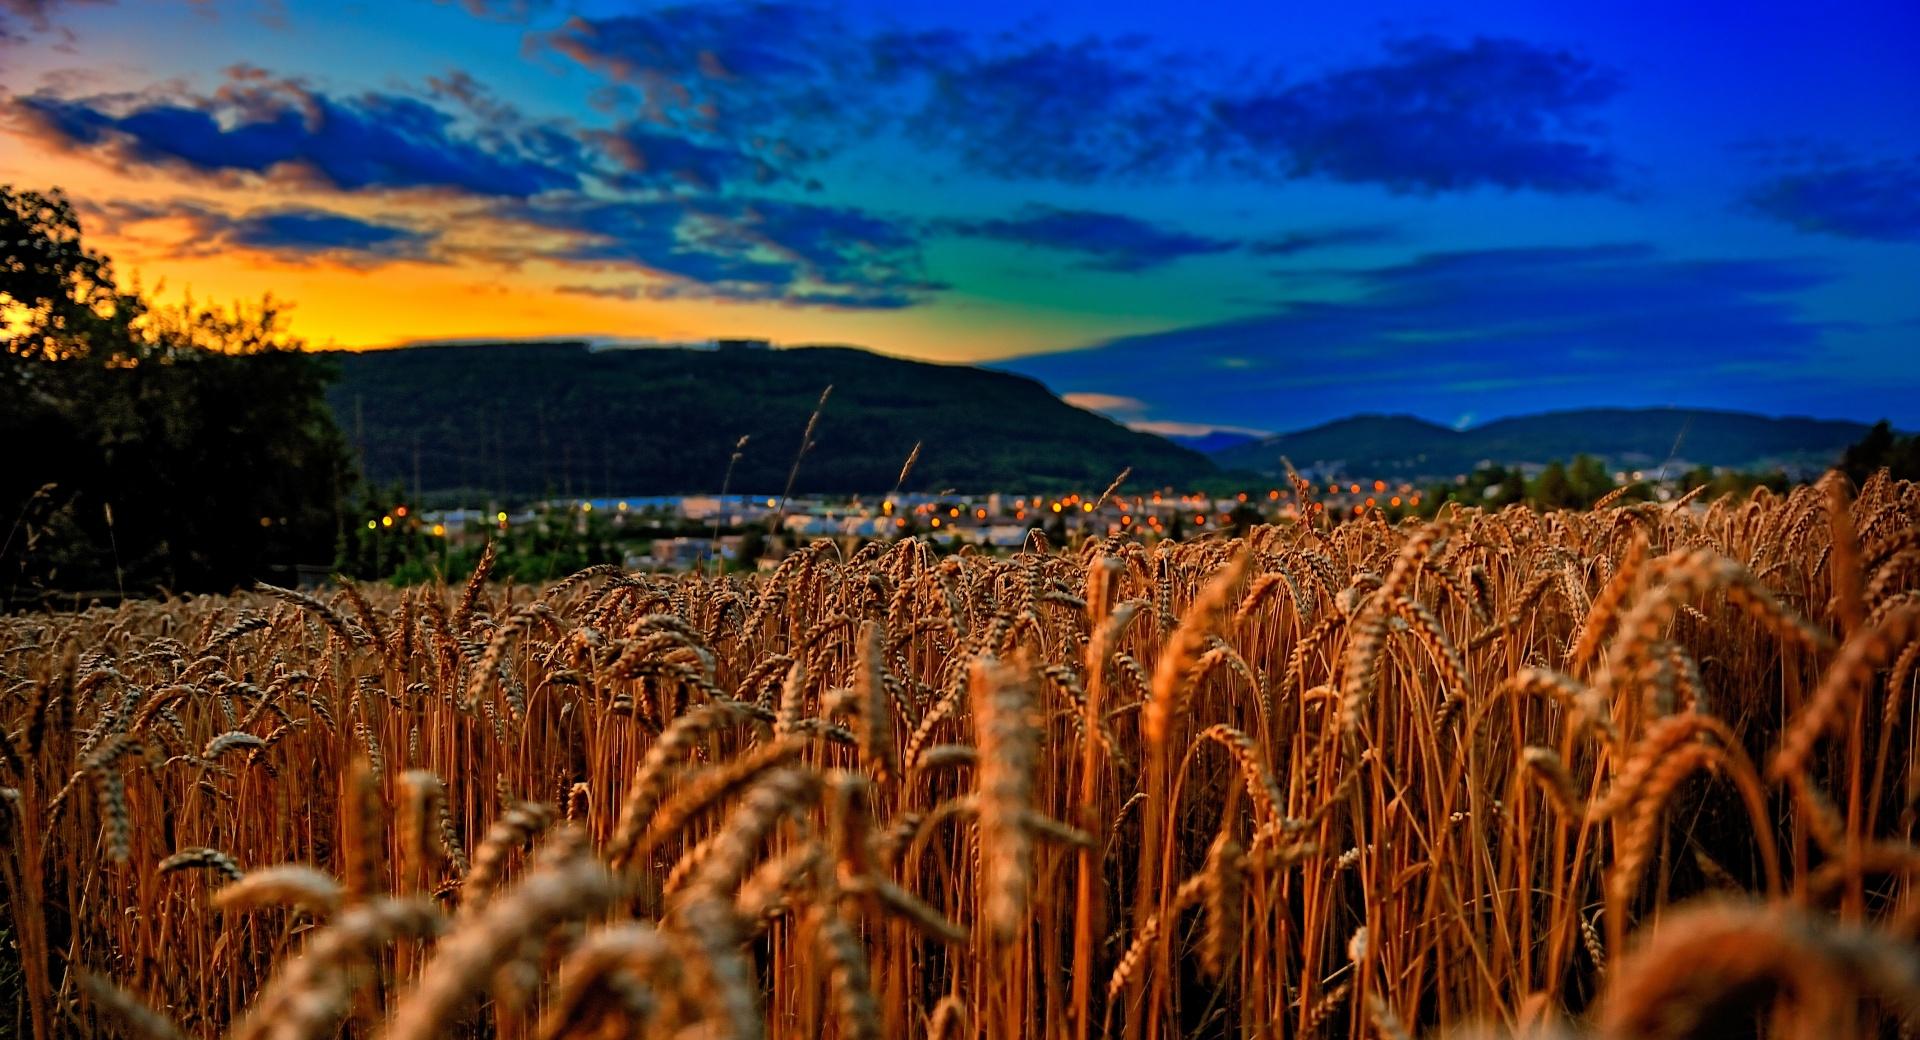 Wheat Field At Twilight at 1024 x 1024 iPad size wallpapers HD quality